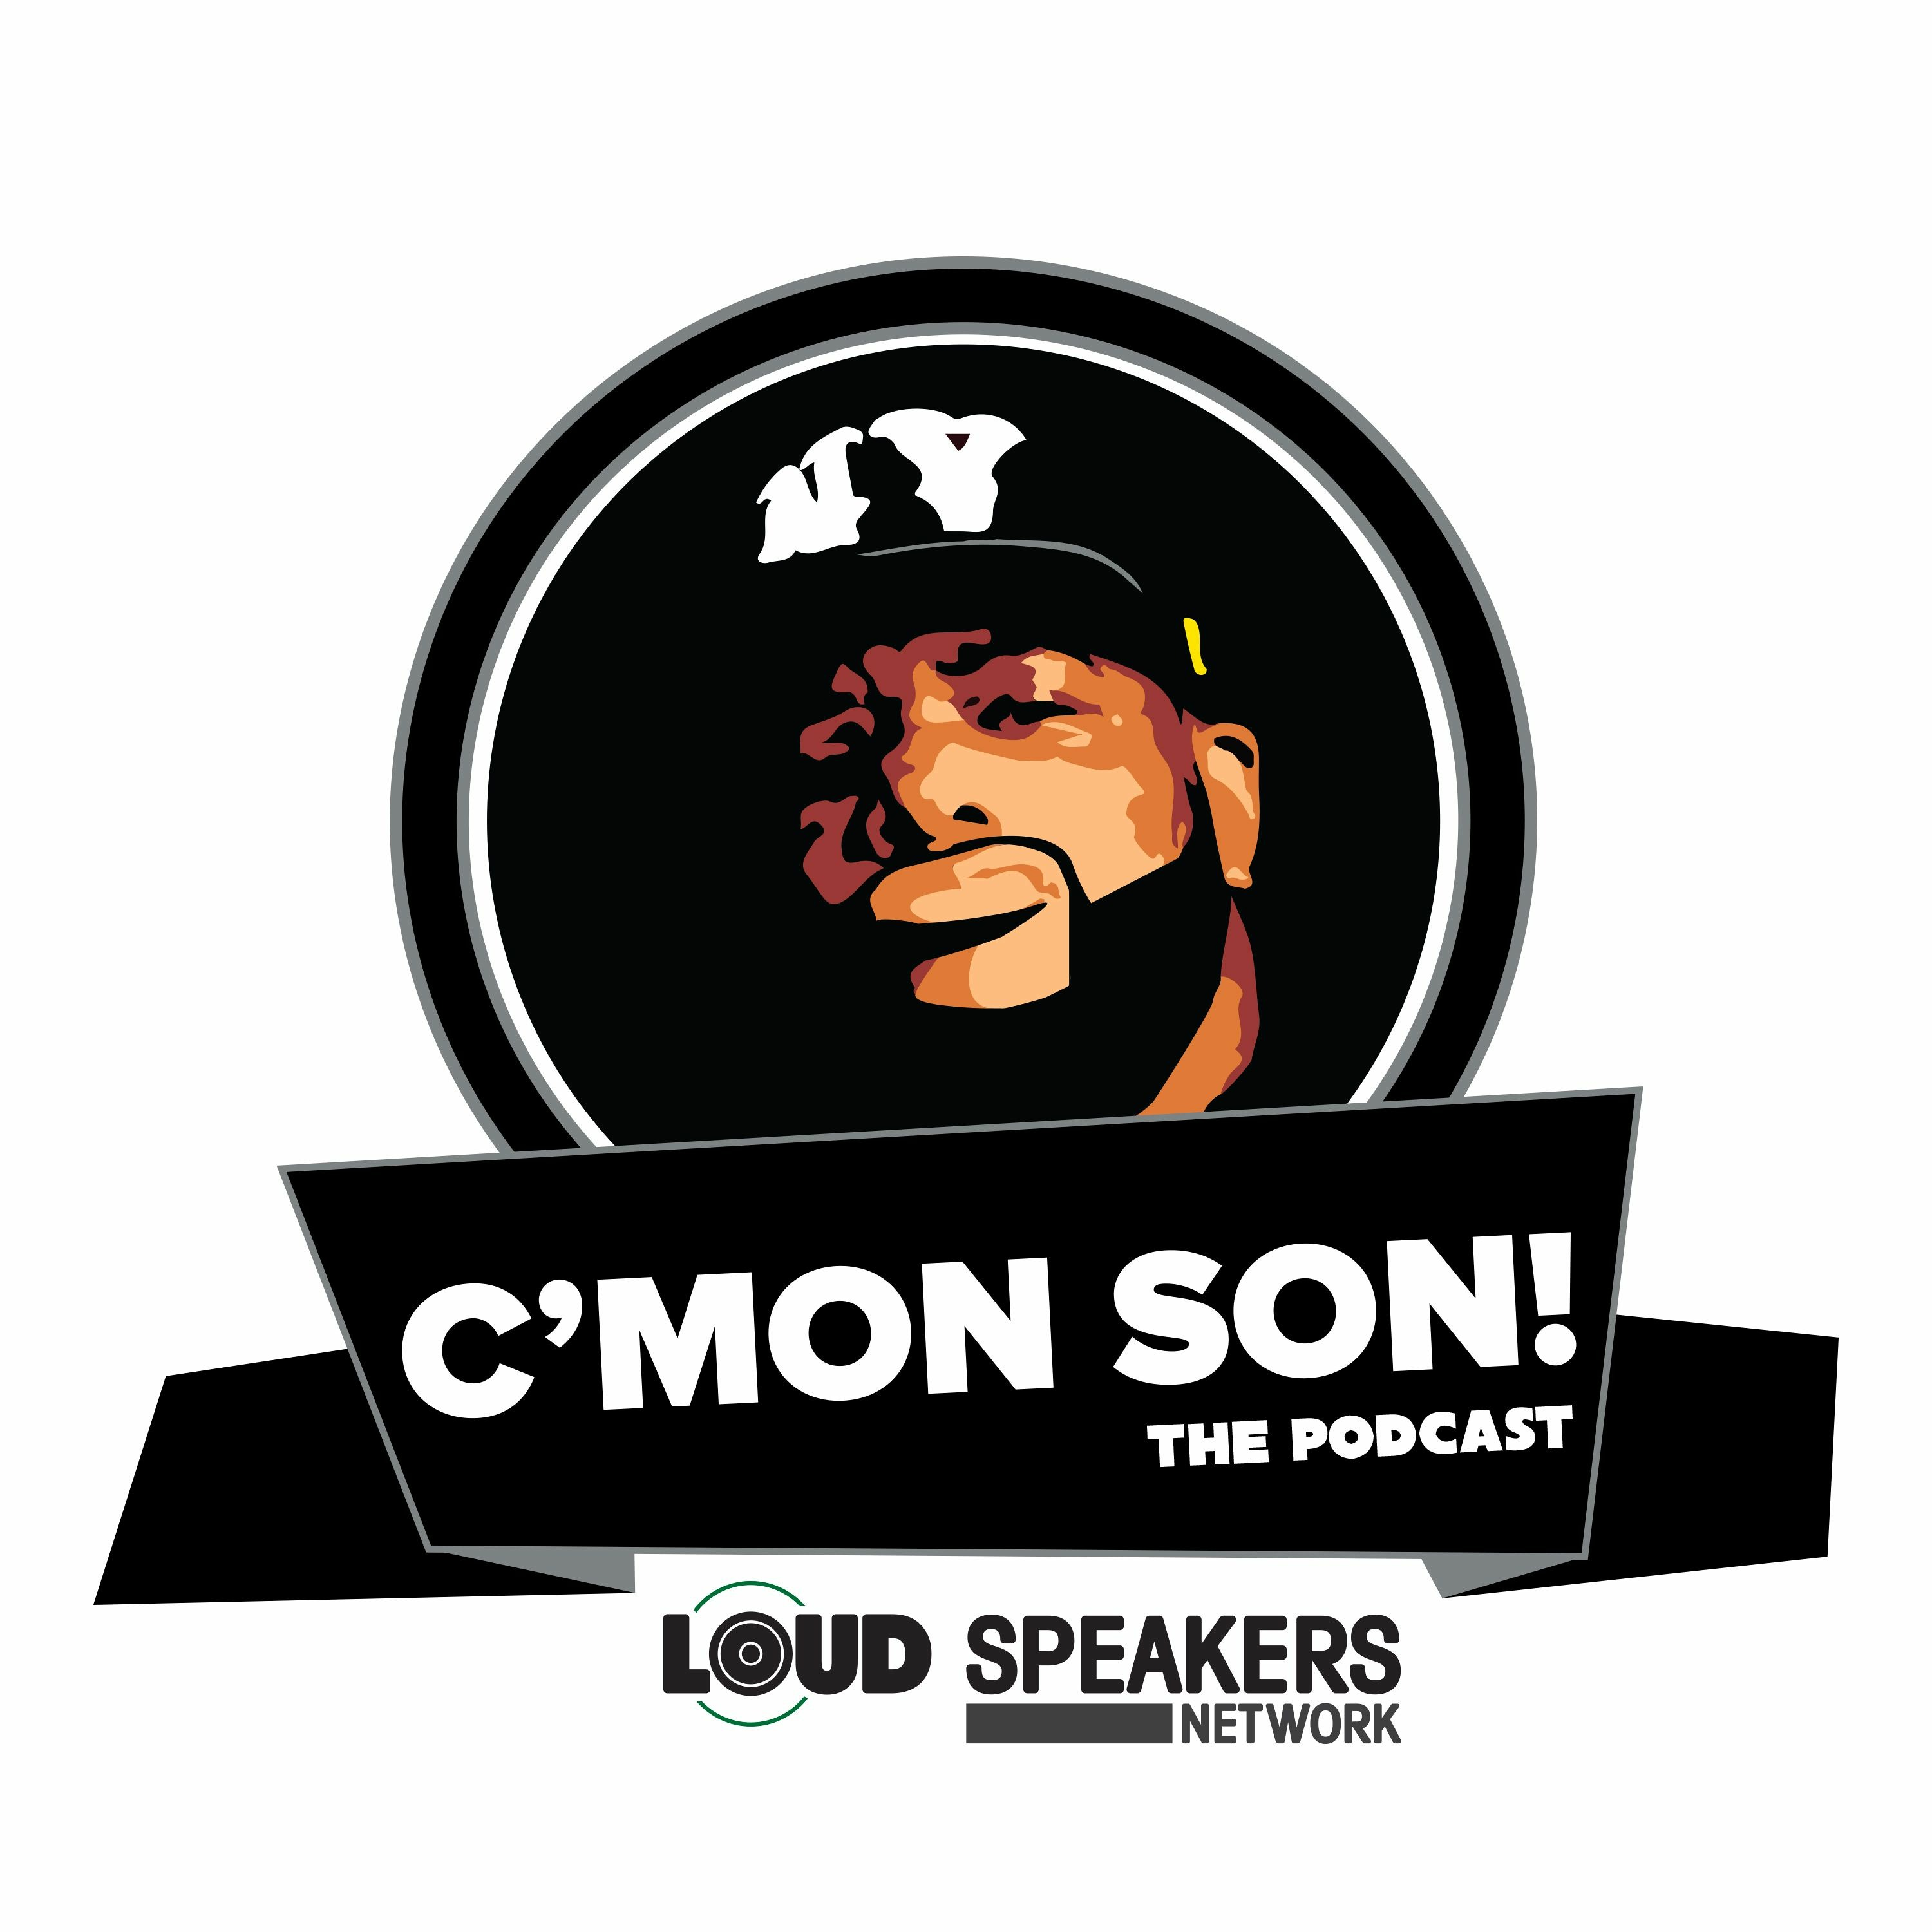 C'Mon Son! The Podcast Series 6 Episode #65: T-Pain